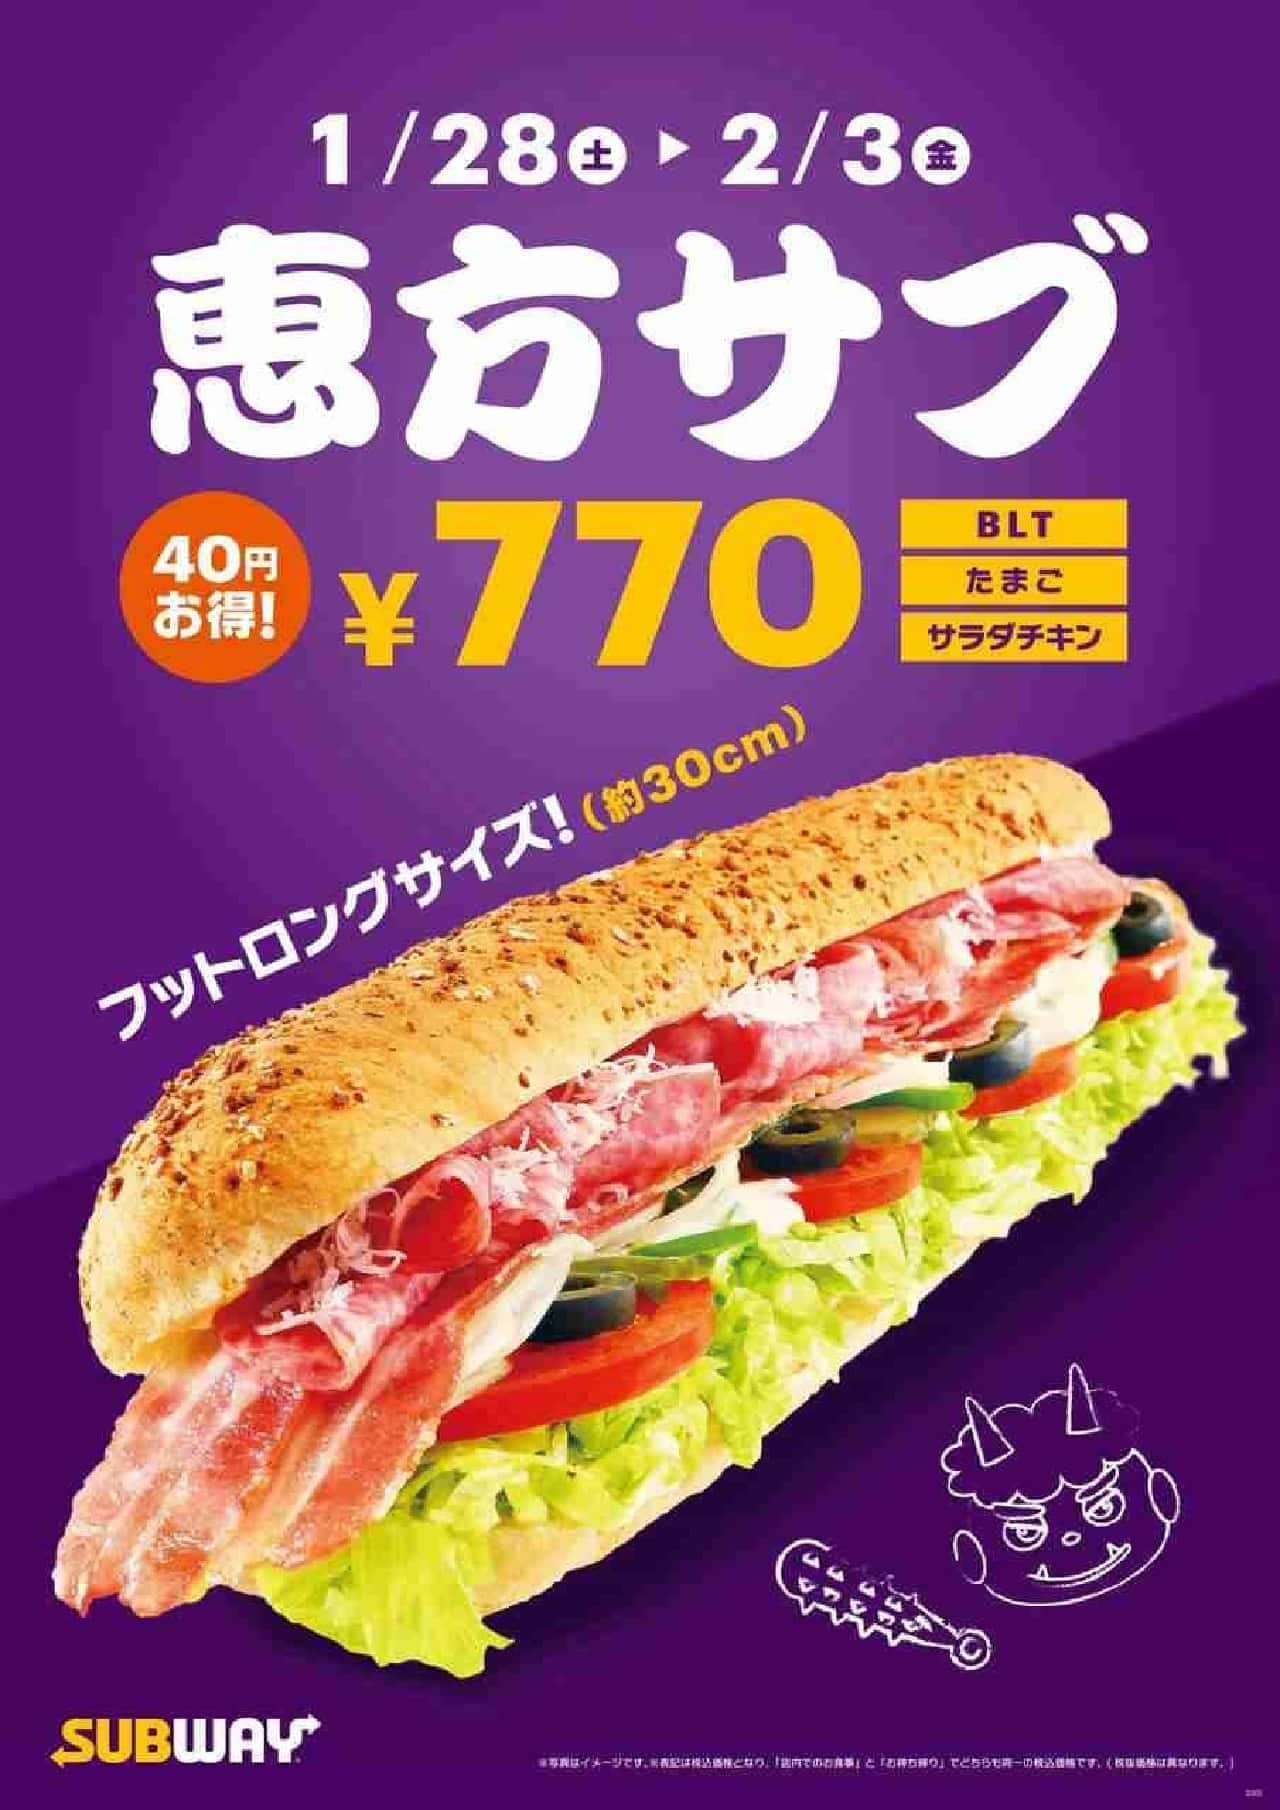 Subway "Eboshi Sub